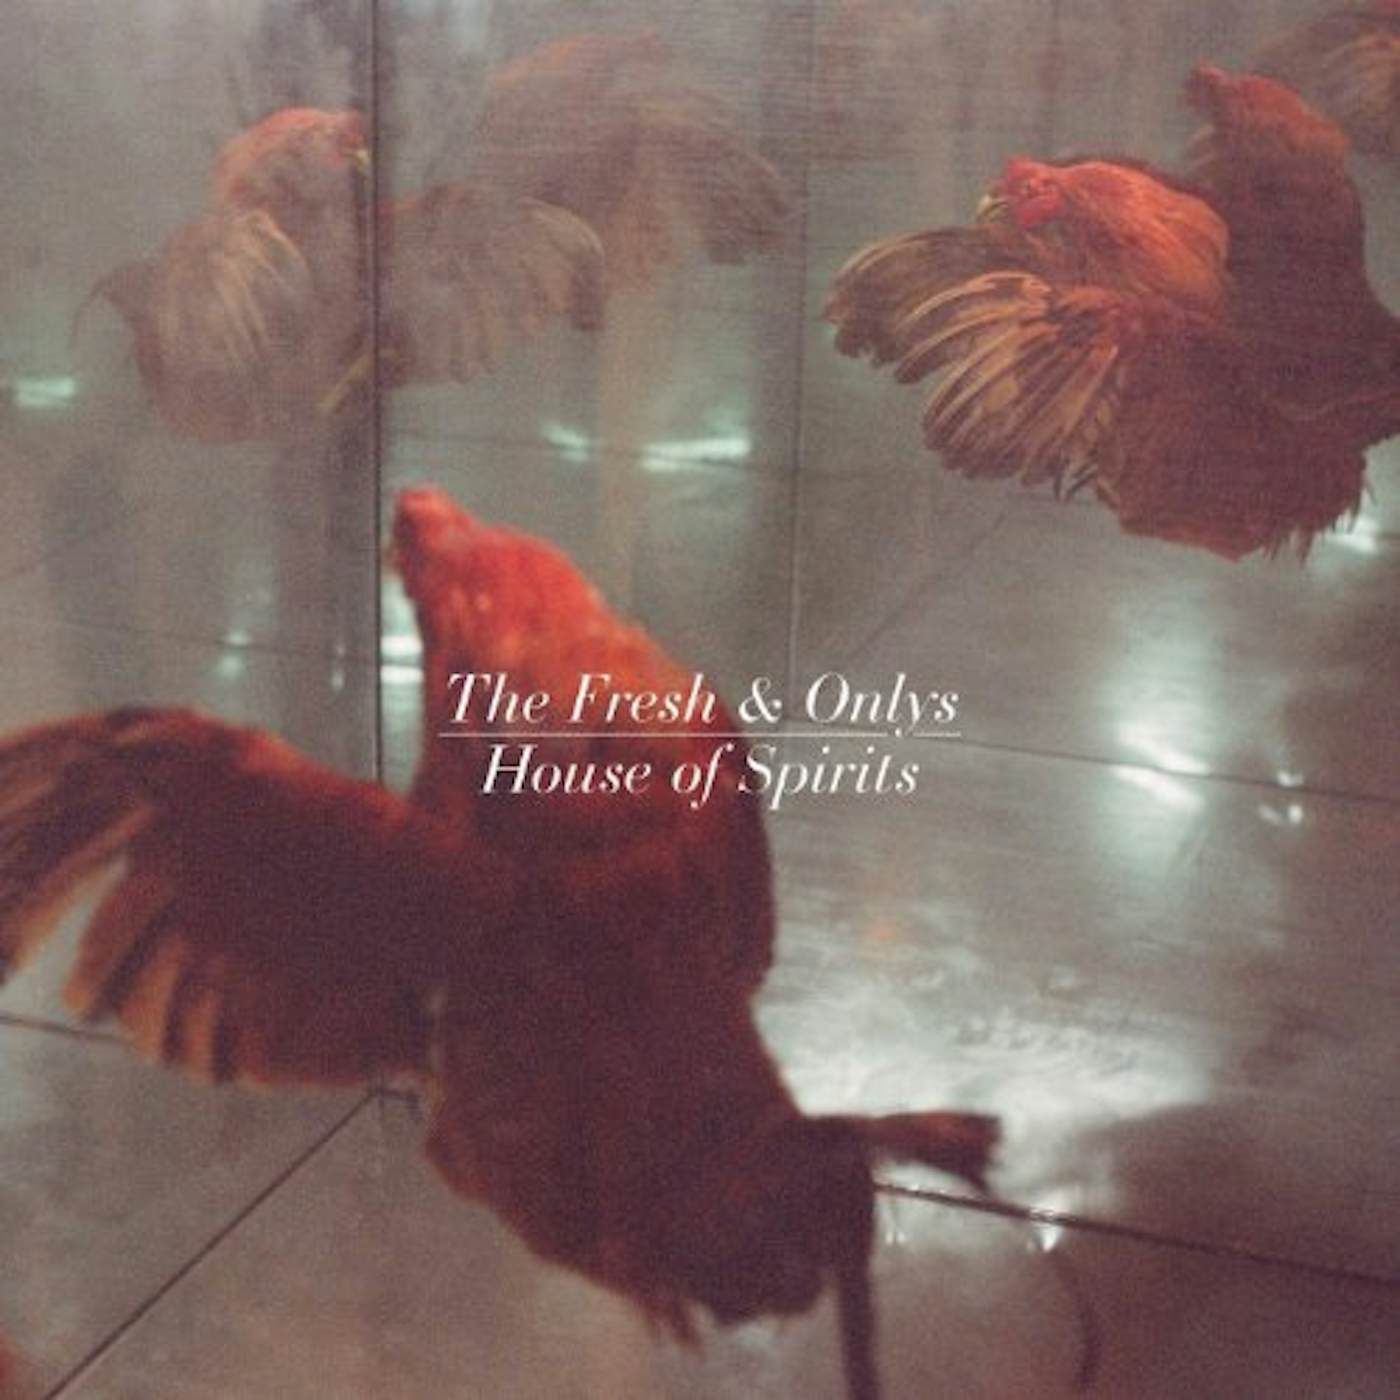 The Fresh & Onlys HOUSE OF SPIRITS CD